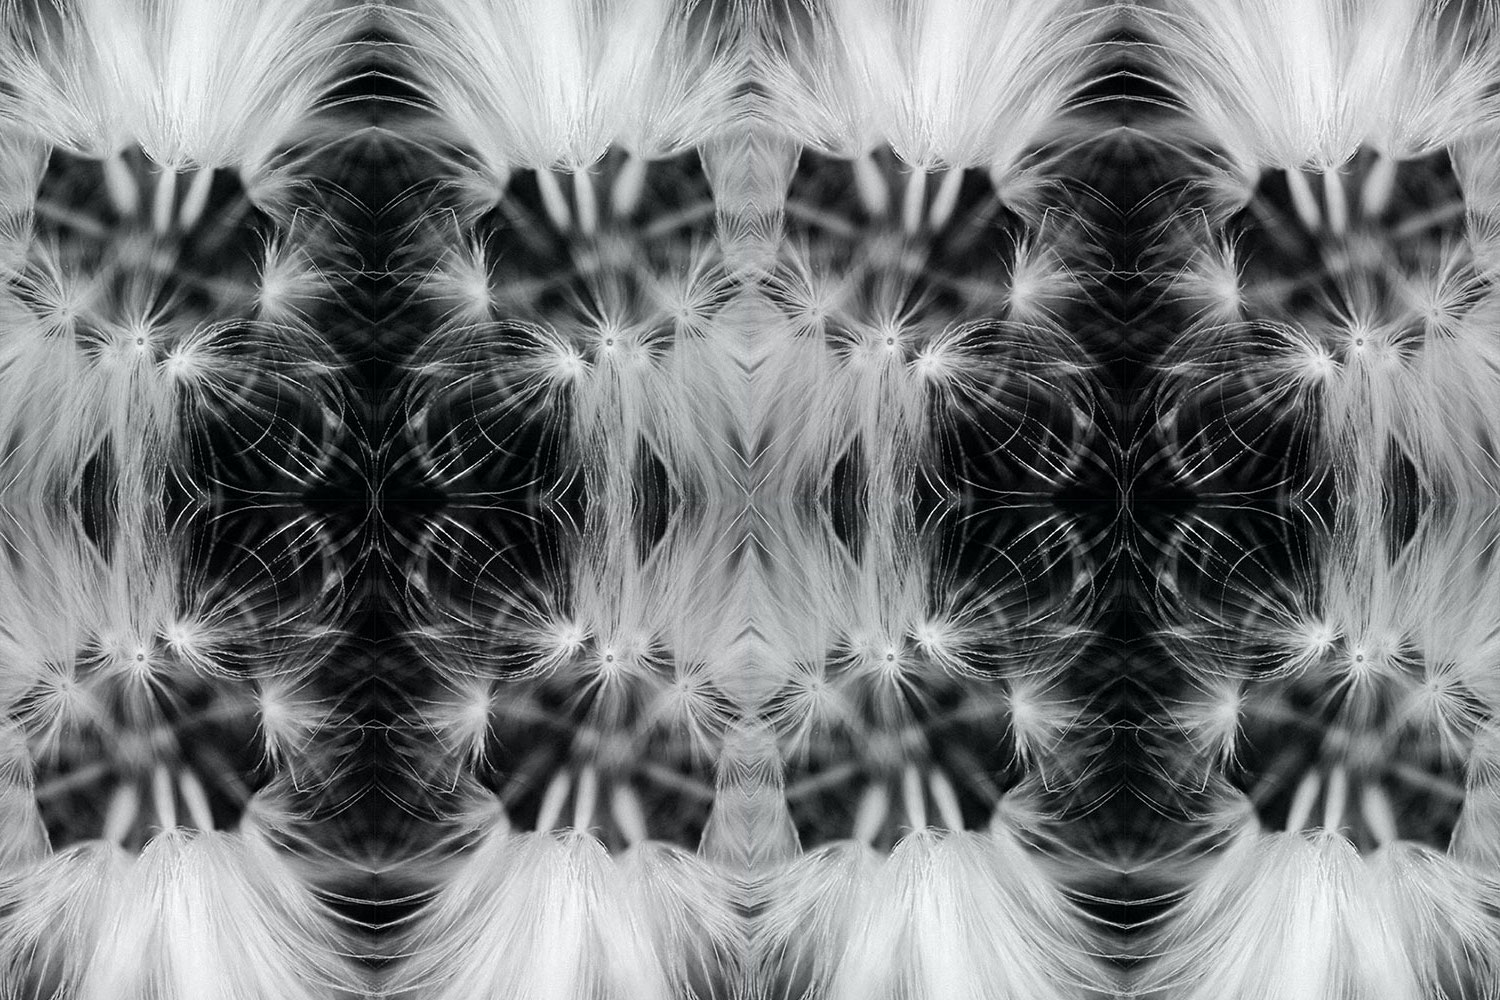 Kaleidoscope black and white photo using a dandelion seed